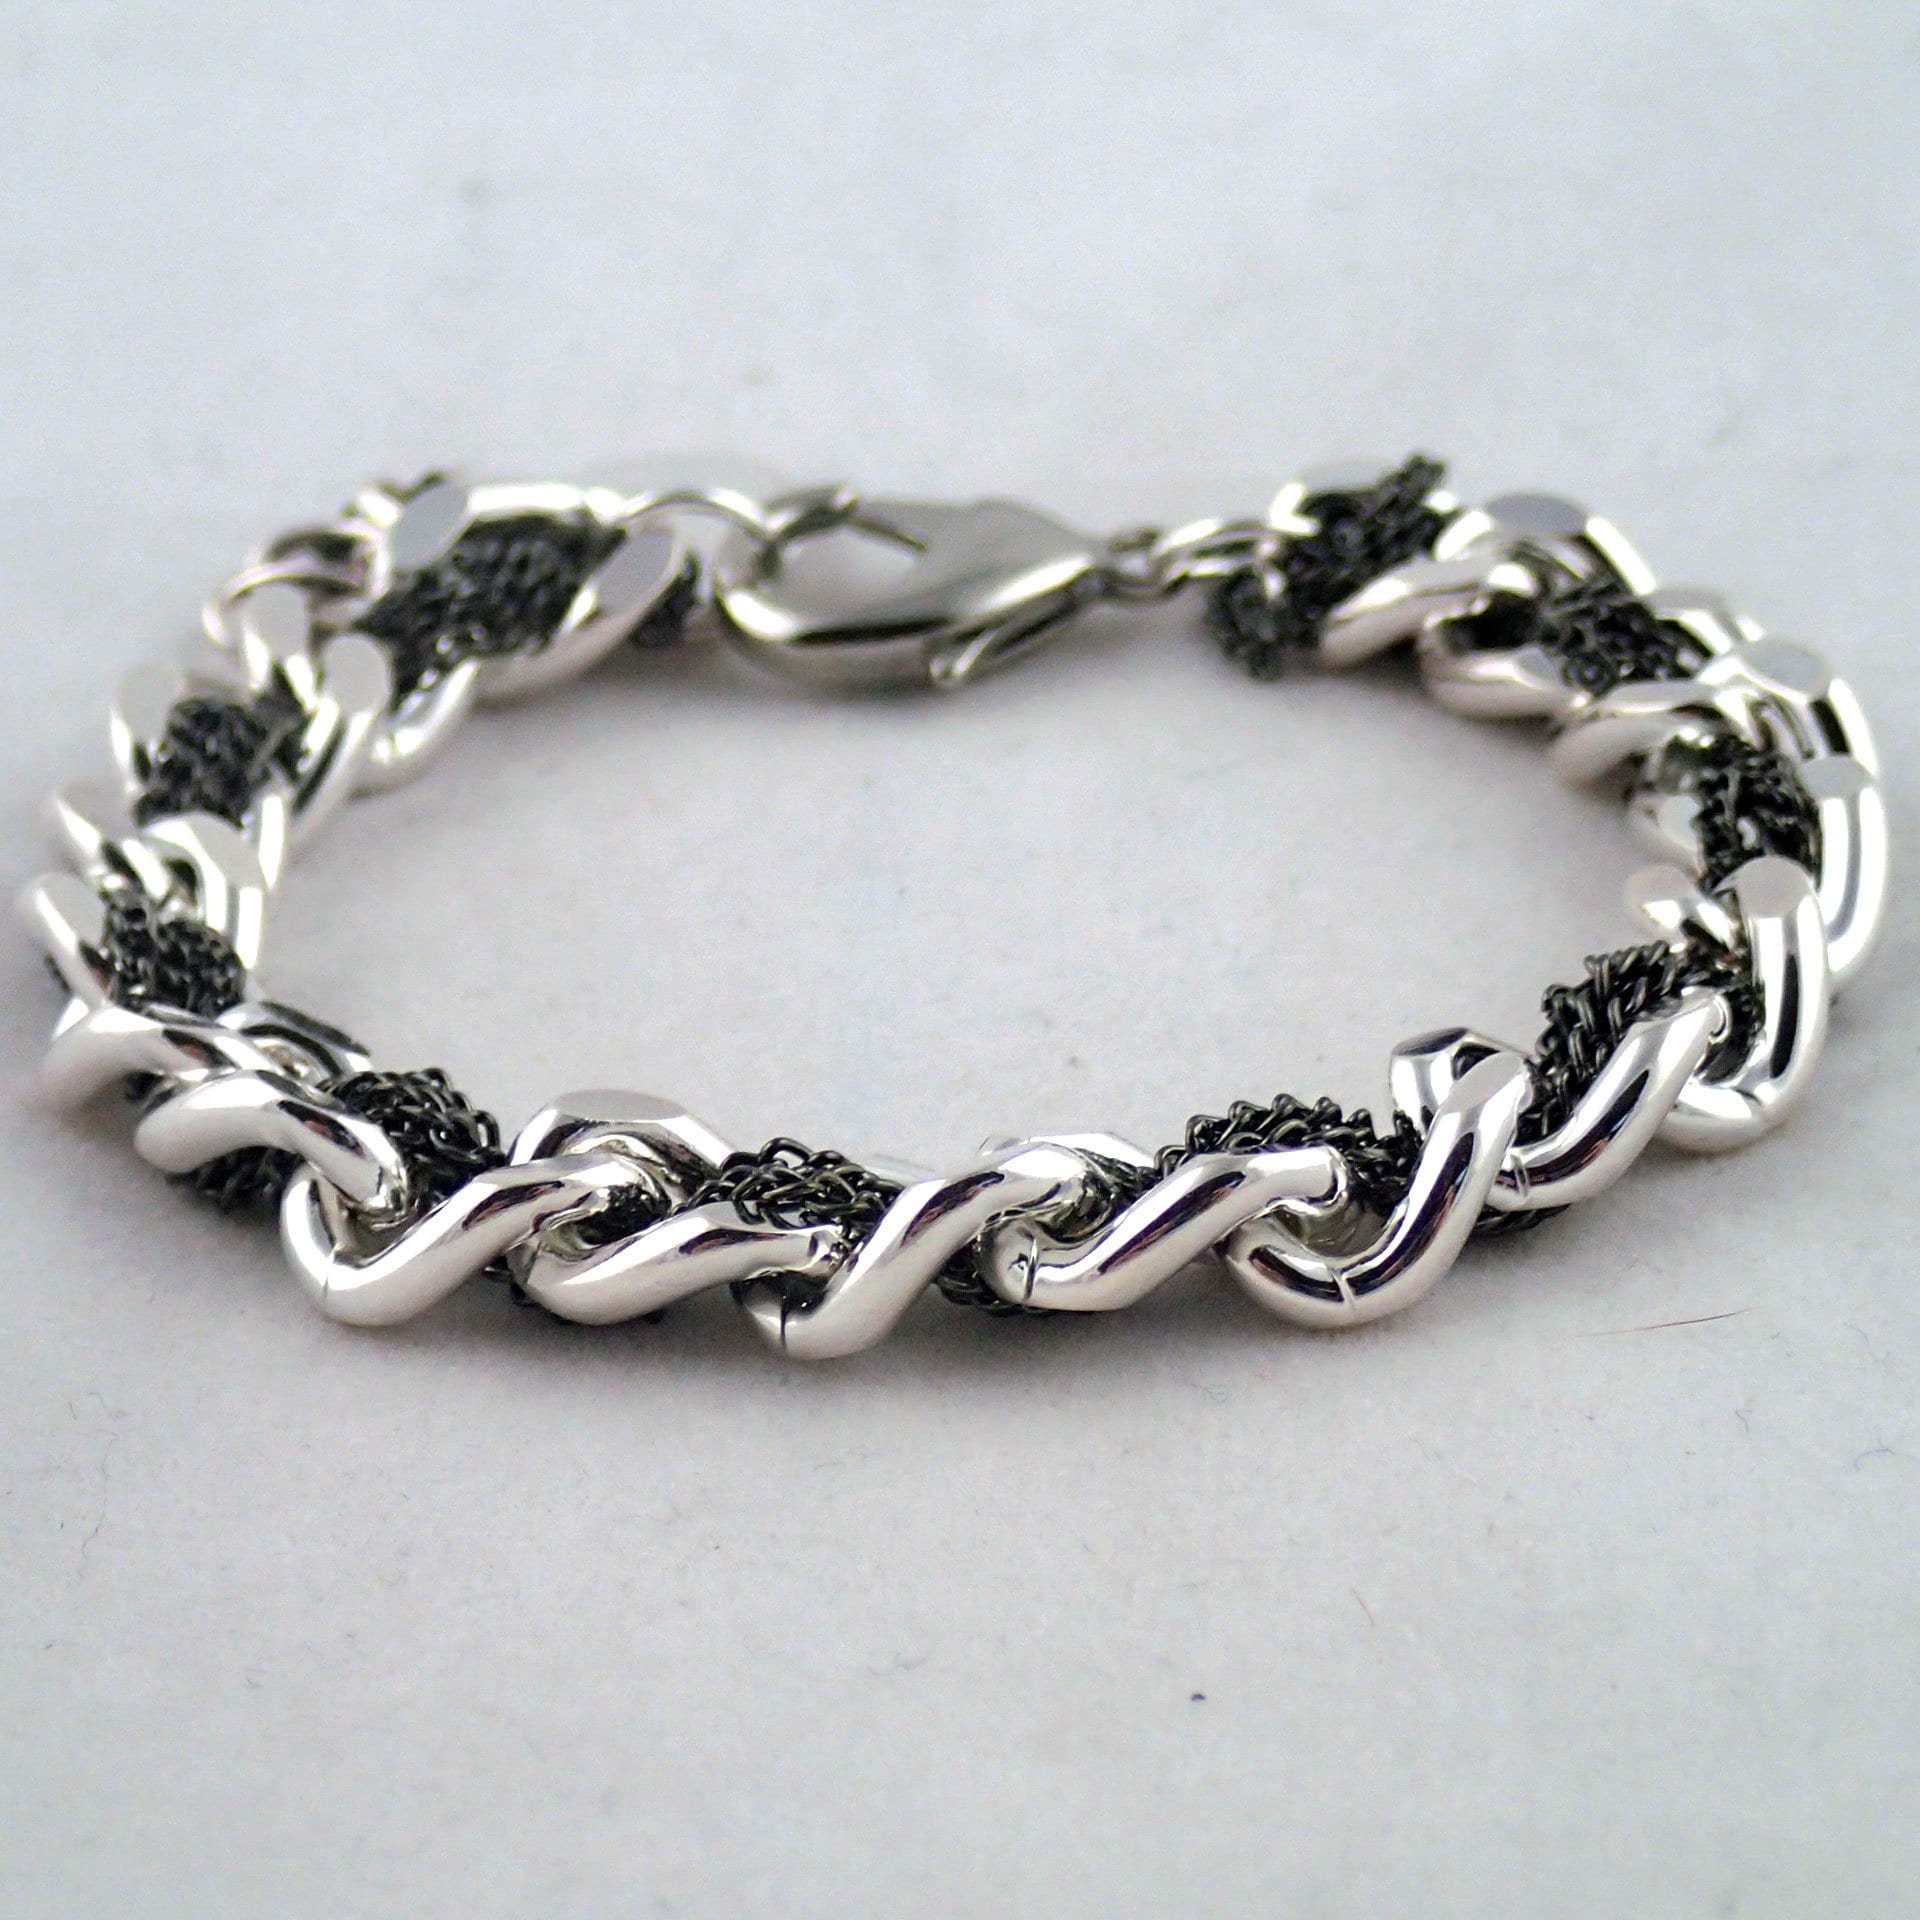 Through 'n Through Chain Bracelet in silver and gunmetal | Etsy